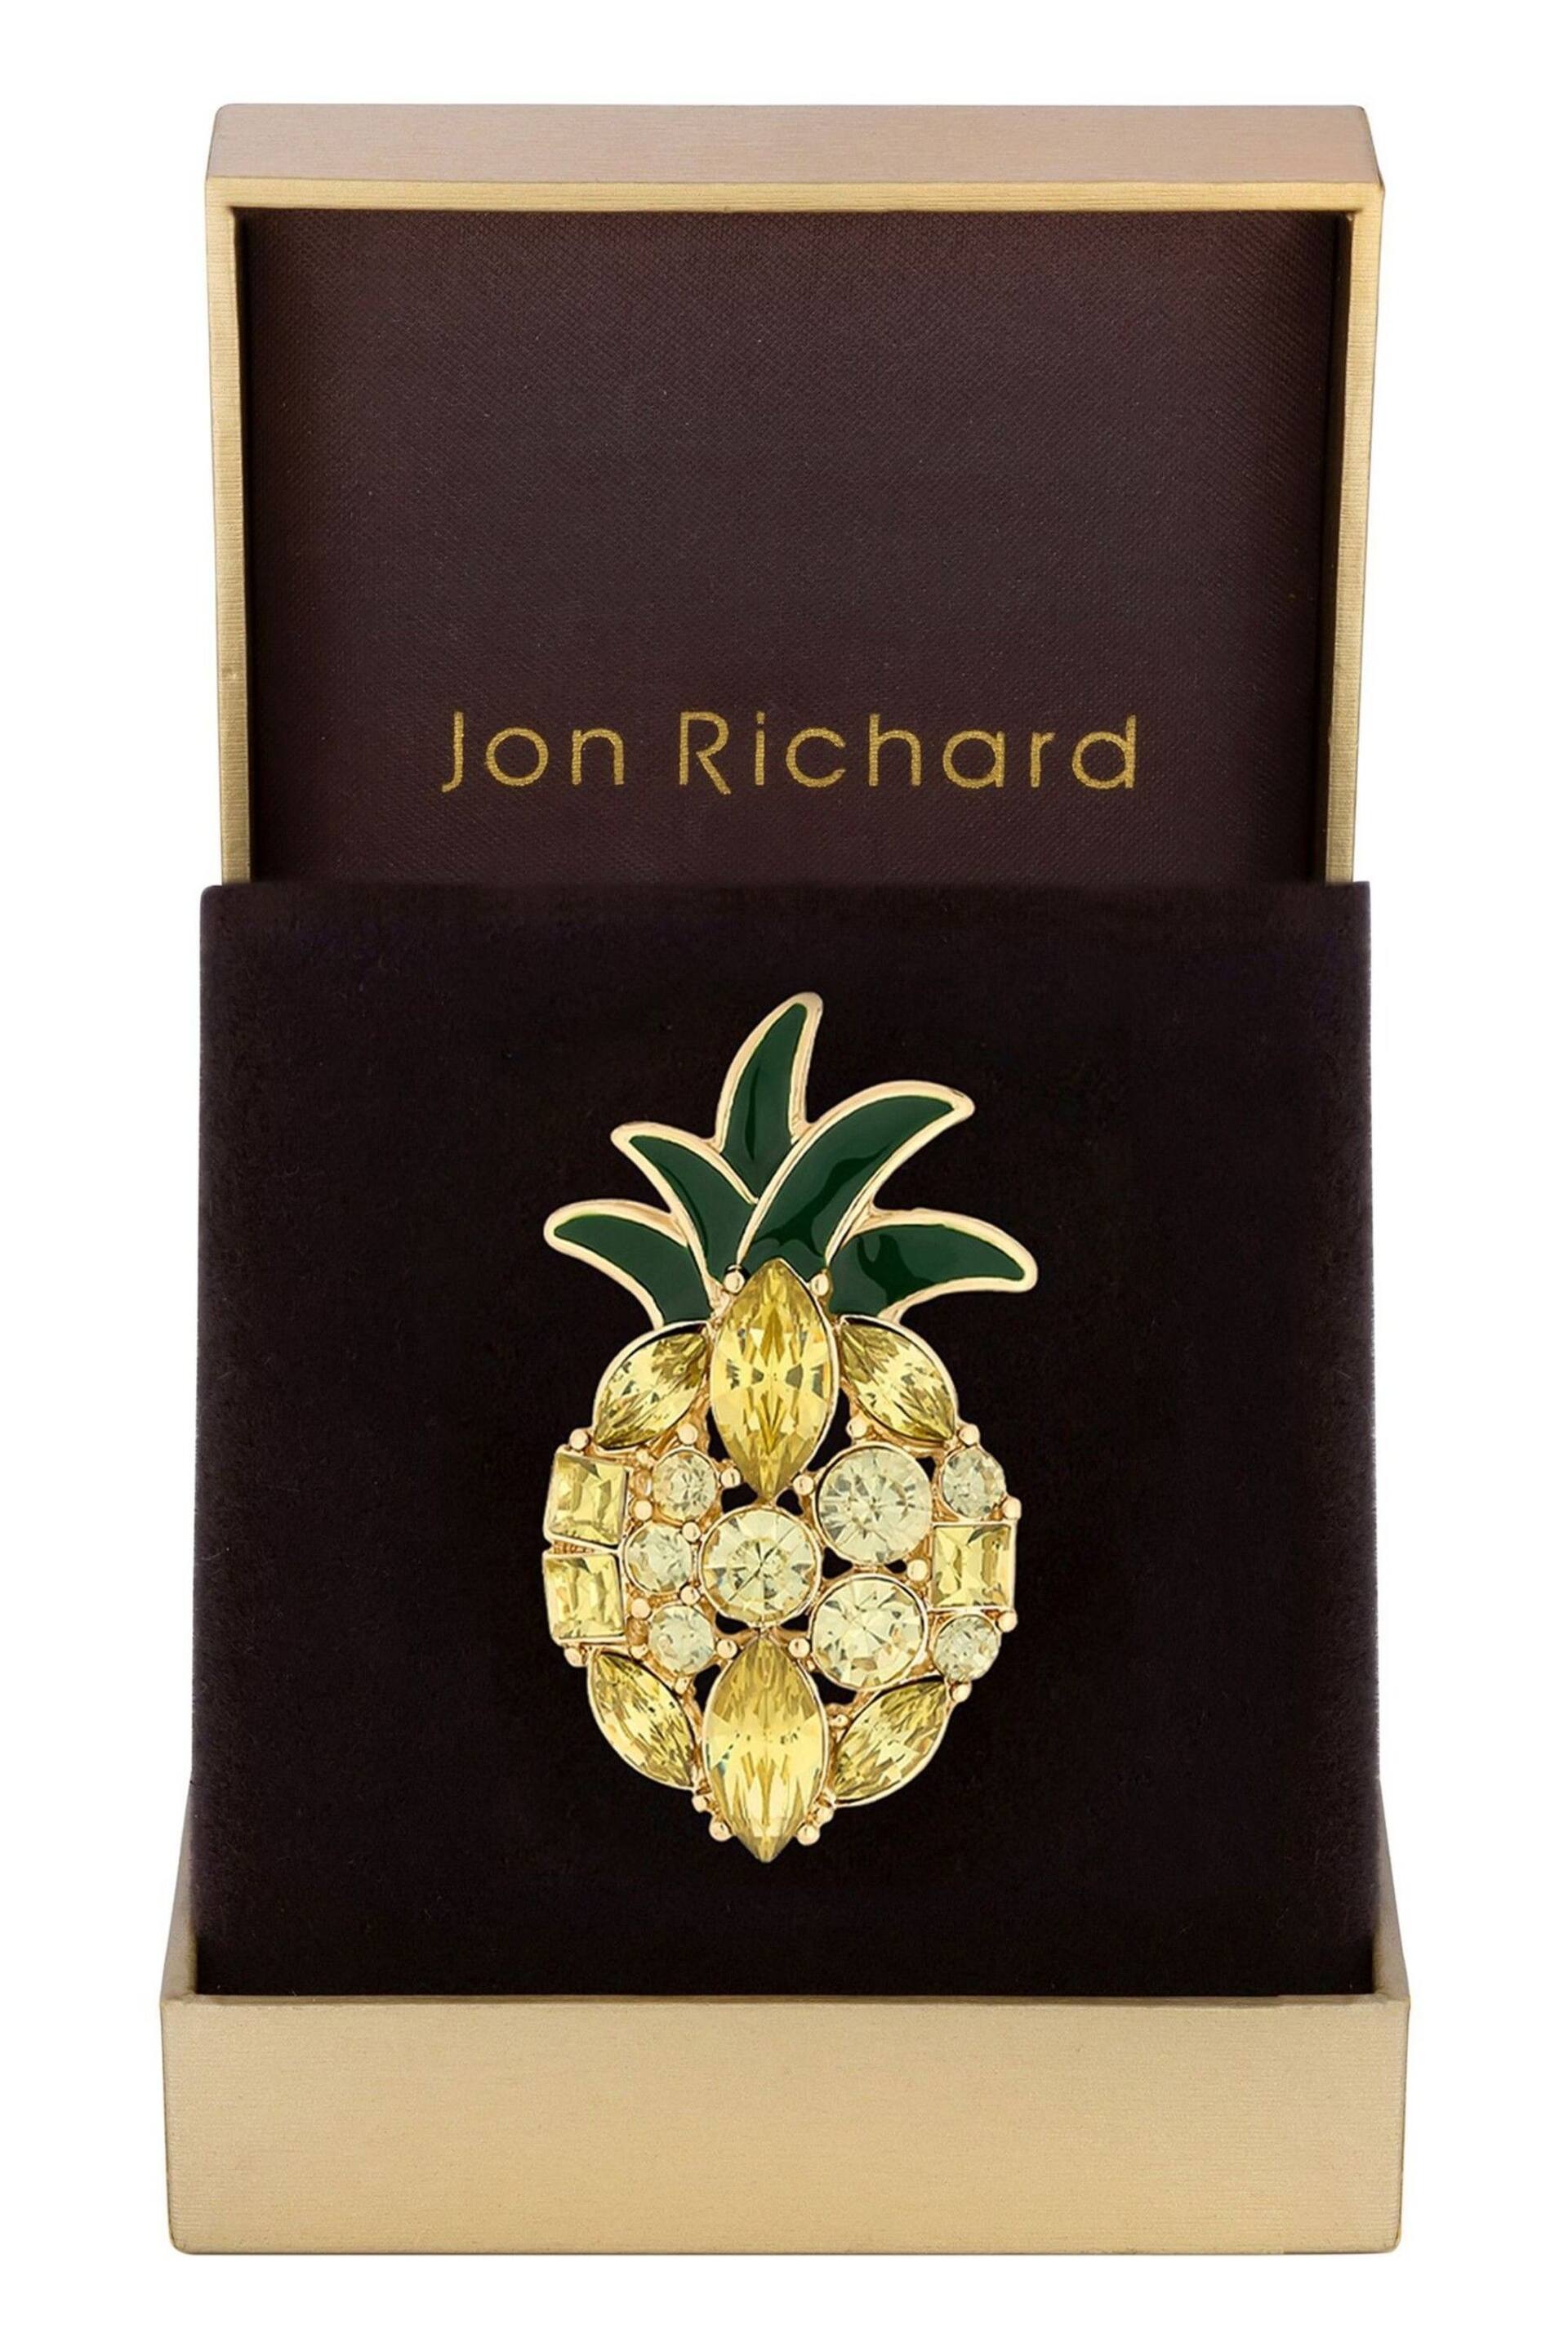 Jon Richard Gold Pineapple Brooch Gift Box - Image 1 of 5